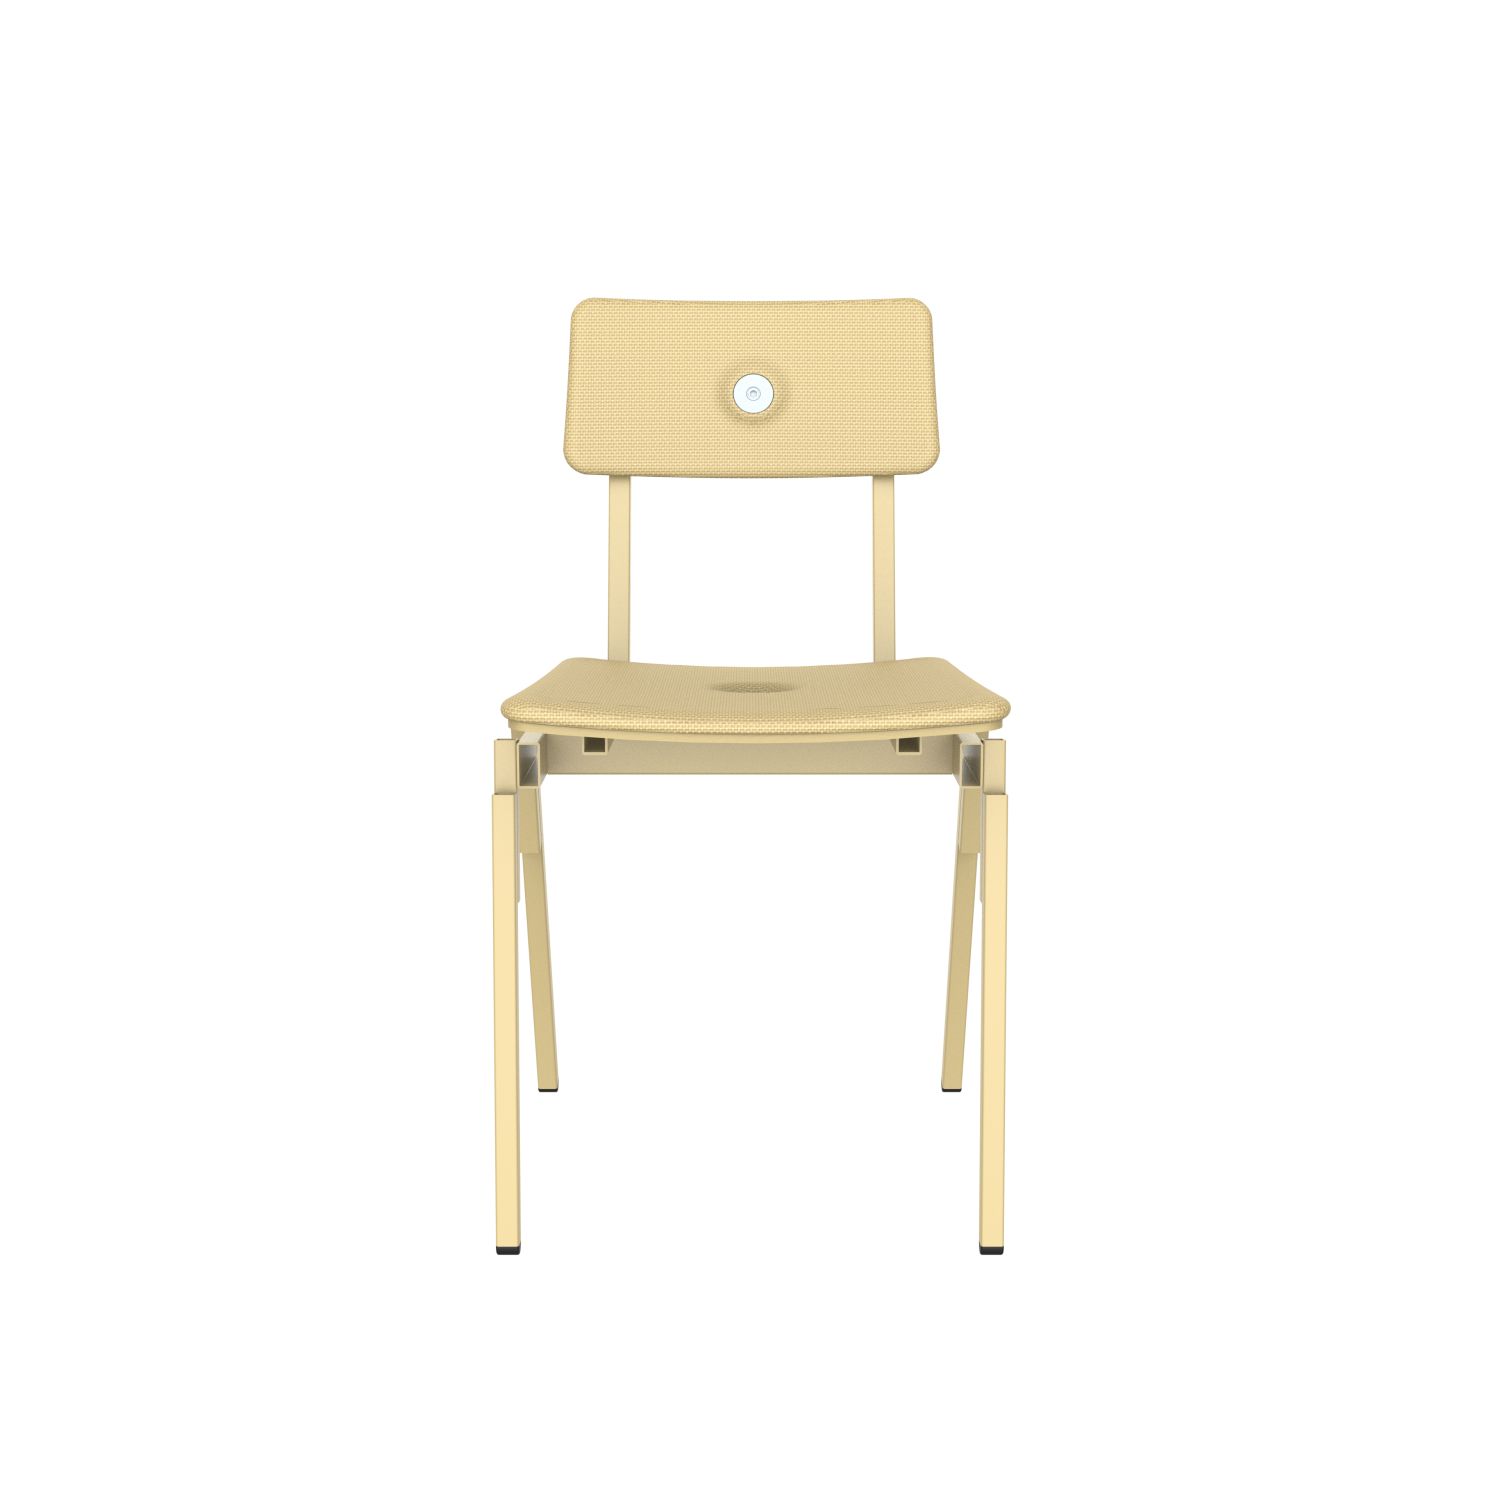 lensvelt piet hein eek mitw upholstered chair without armrests light brown 141 green beige ral1000 hard leg ends